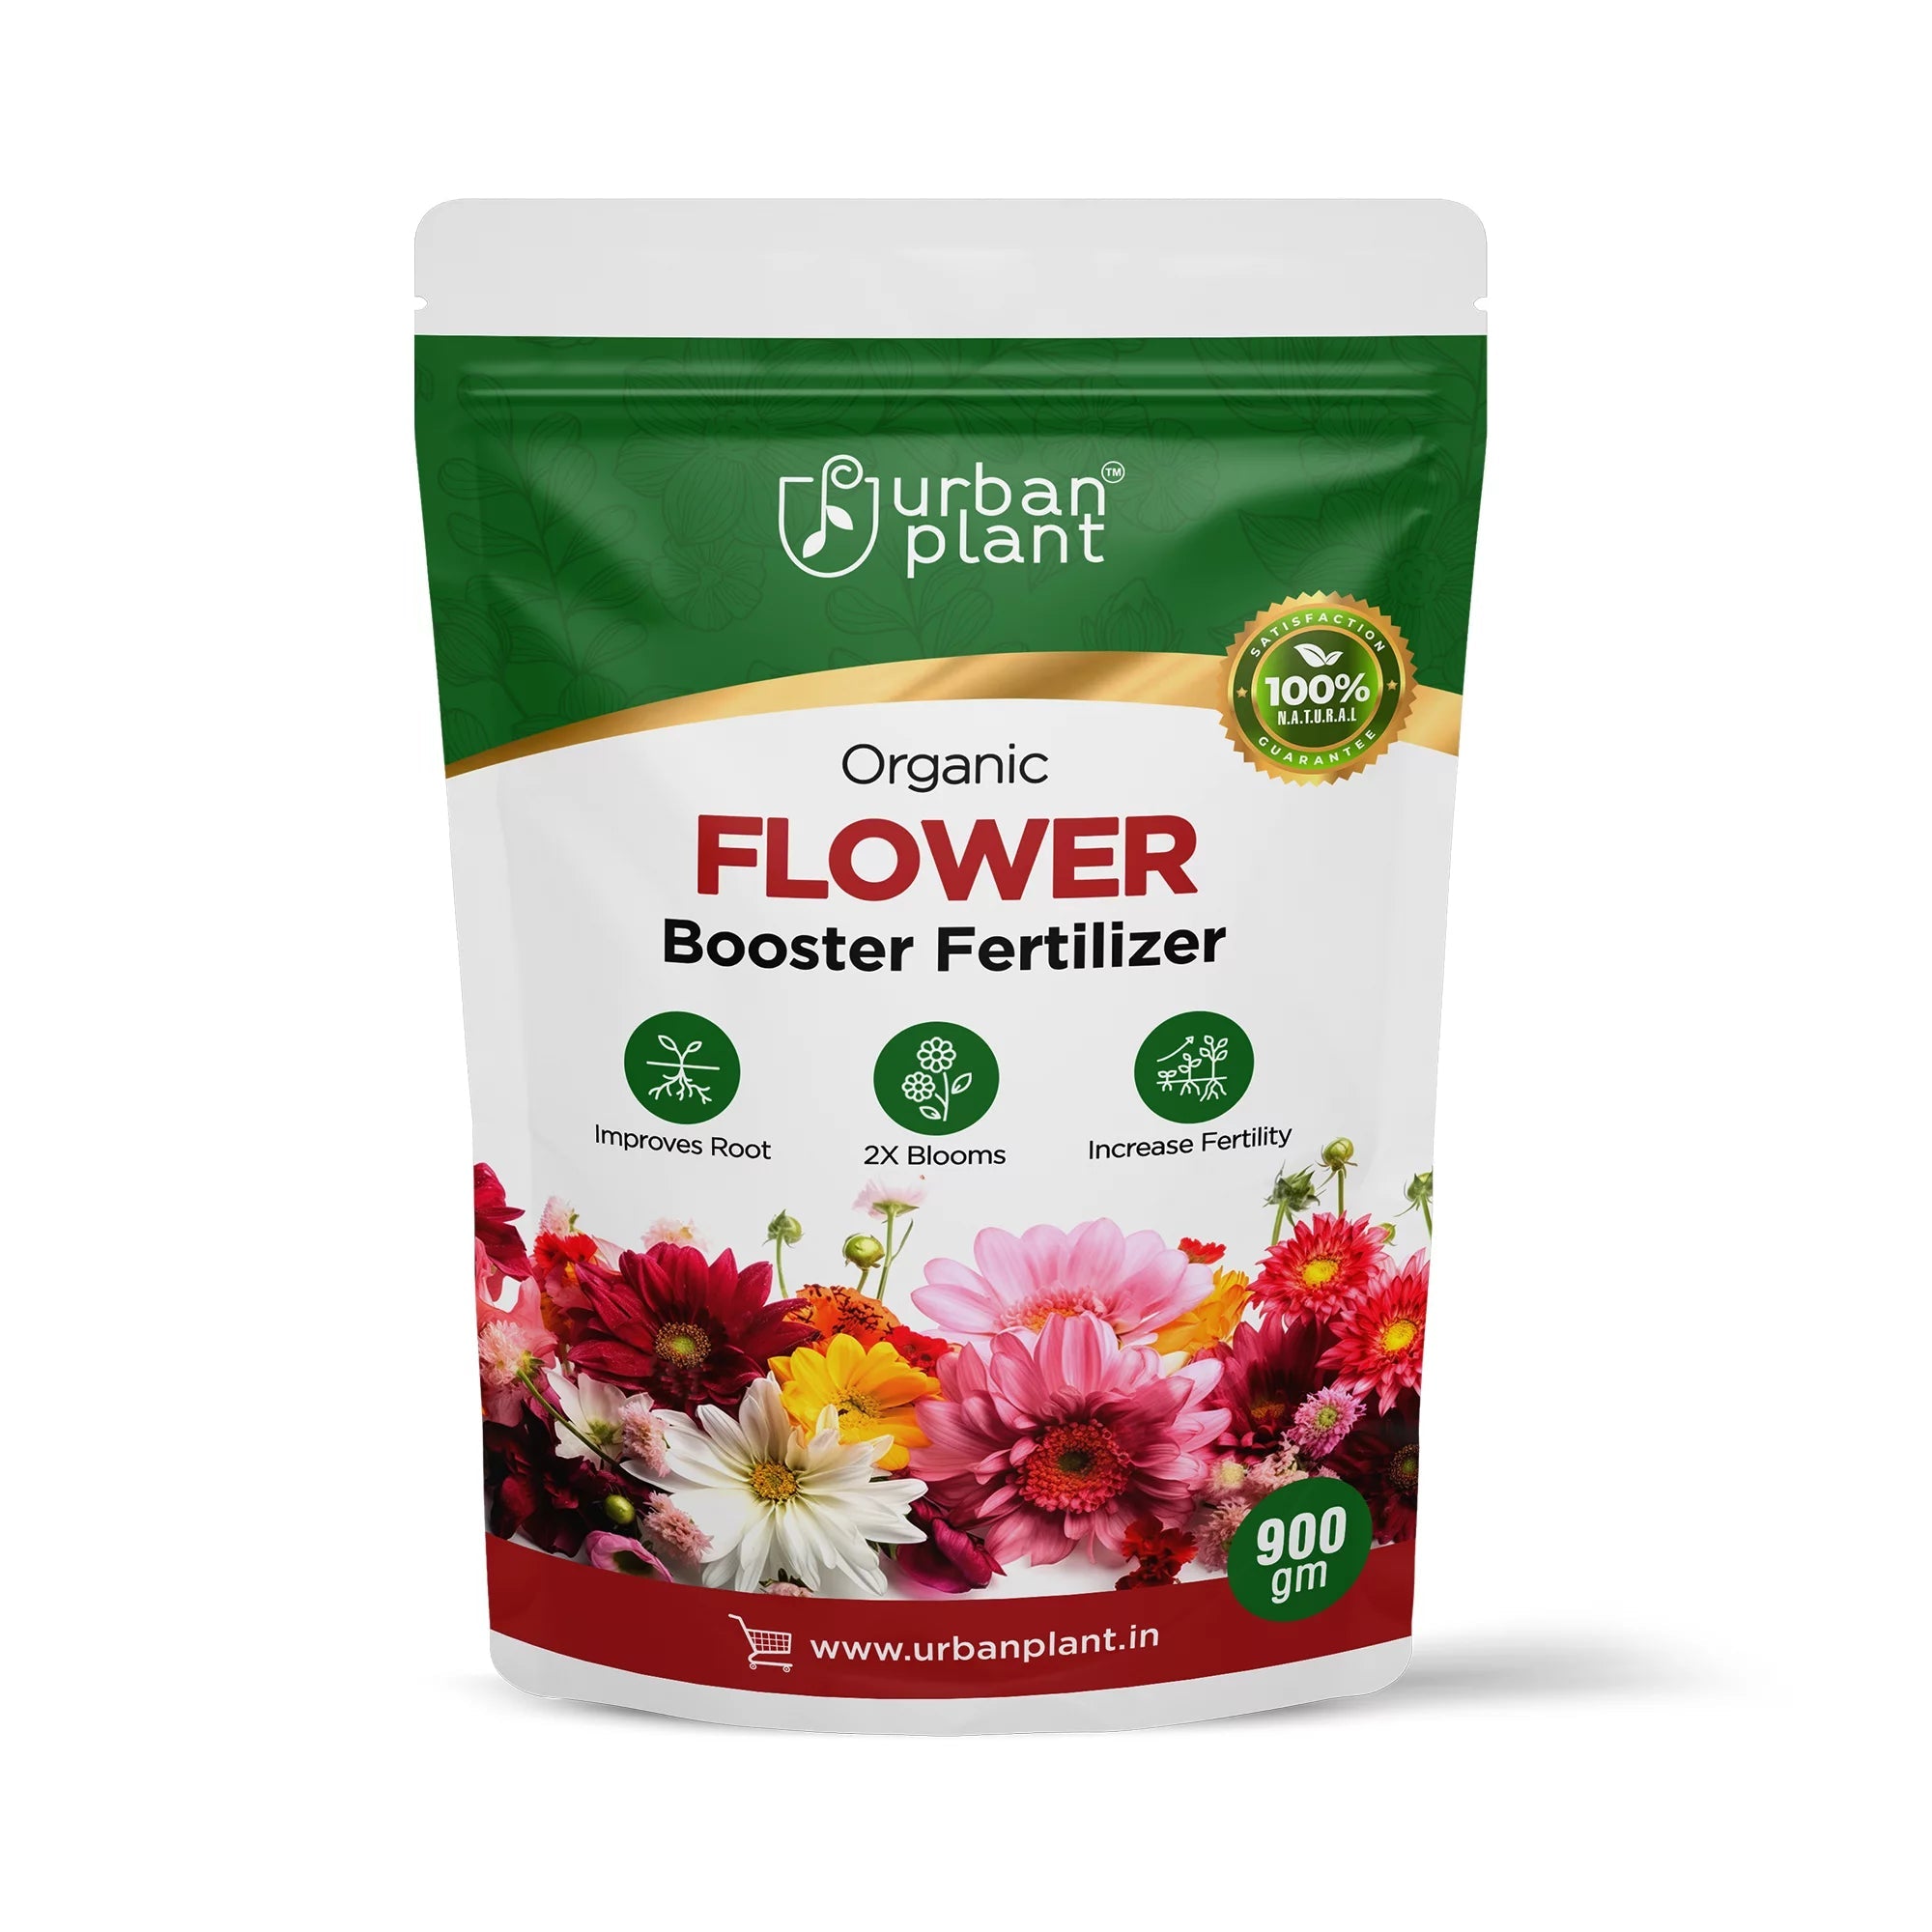 Flower Booster Fertilizer for Rose Plants 900g Potting Mix Urban Plant 1 